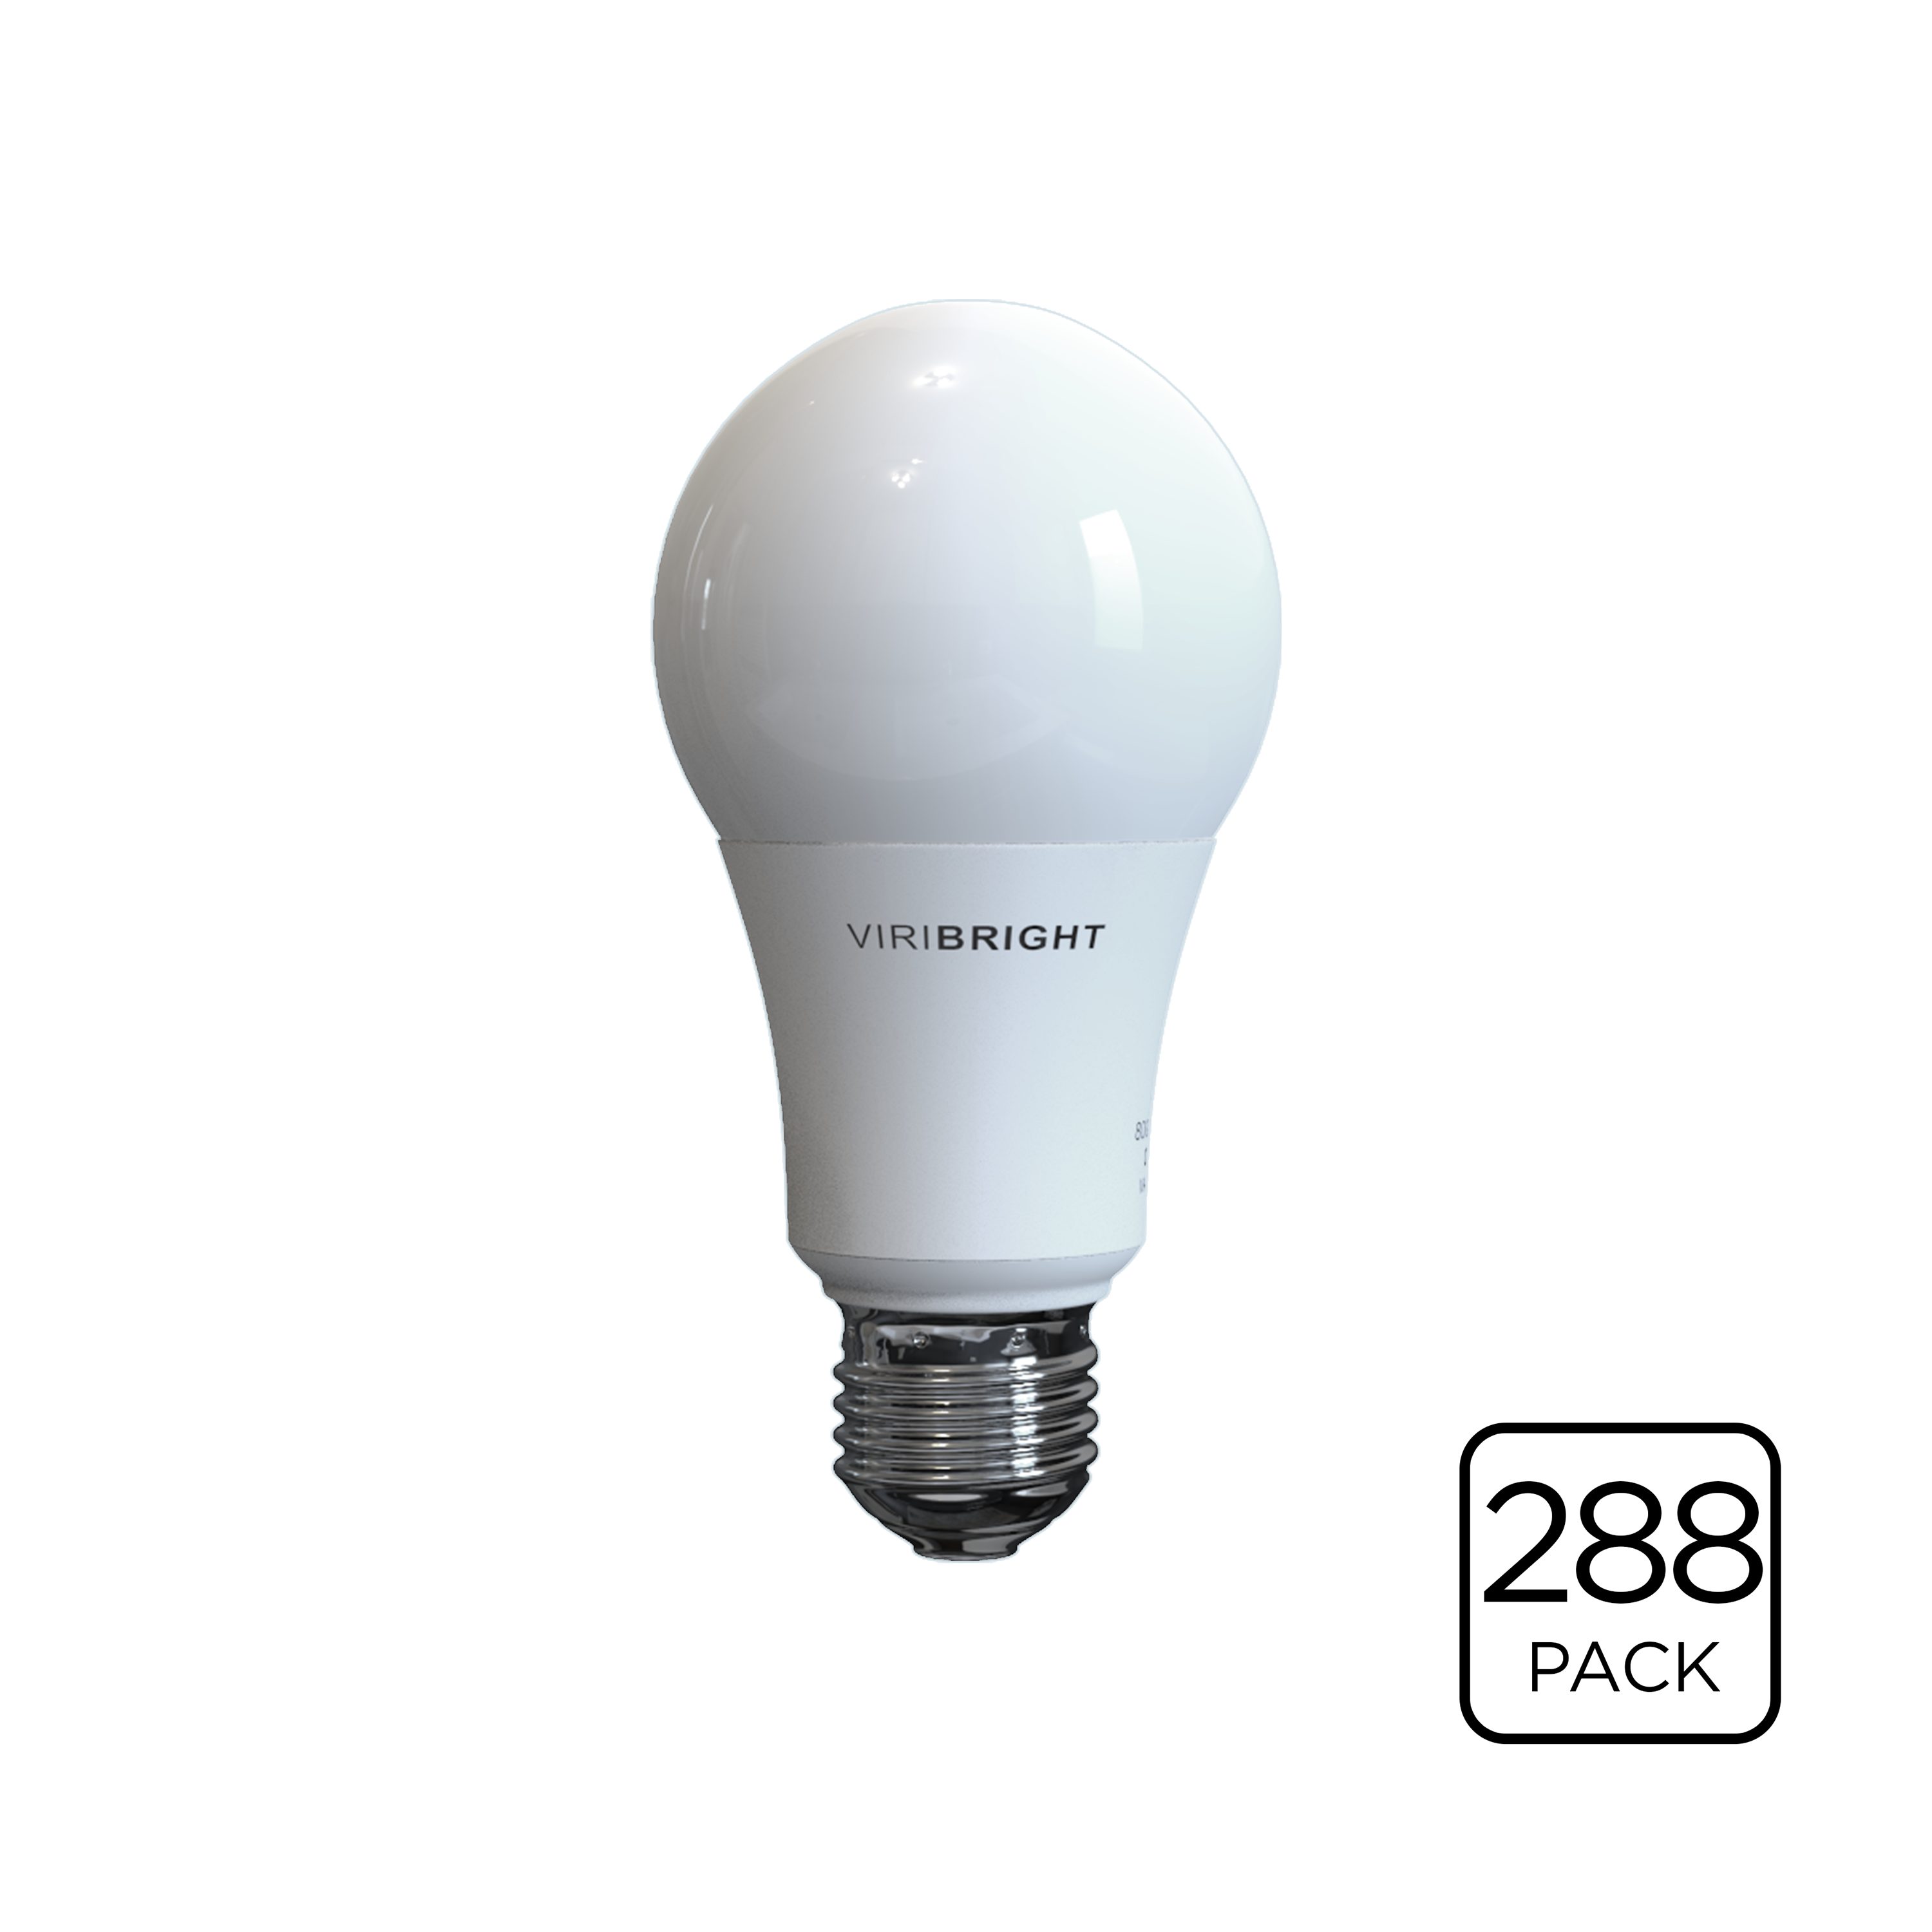 New 60W Equivalent 6W A19 Bulb Warm White LED Filament Light Bulb 2800K 10 Pack 